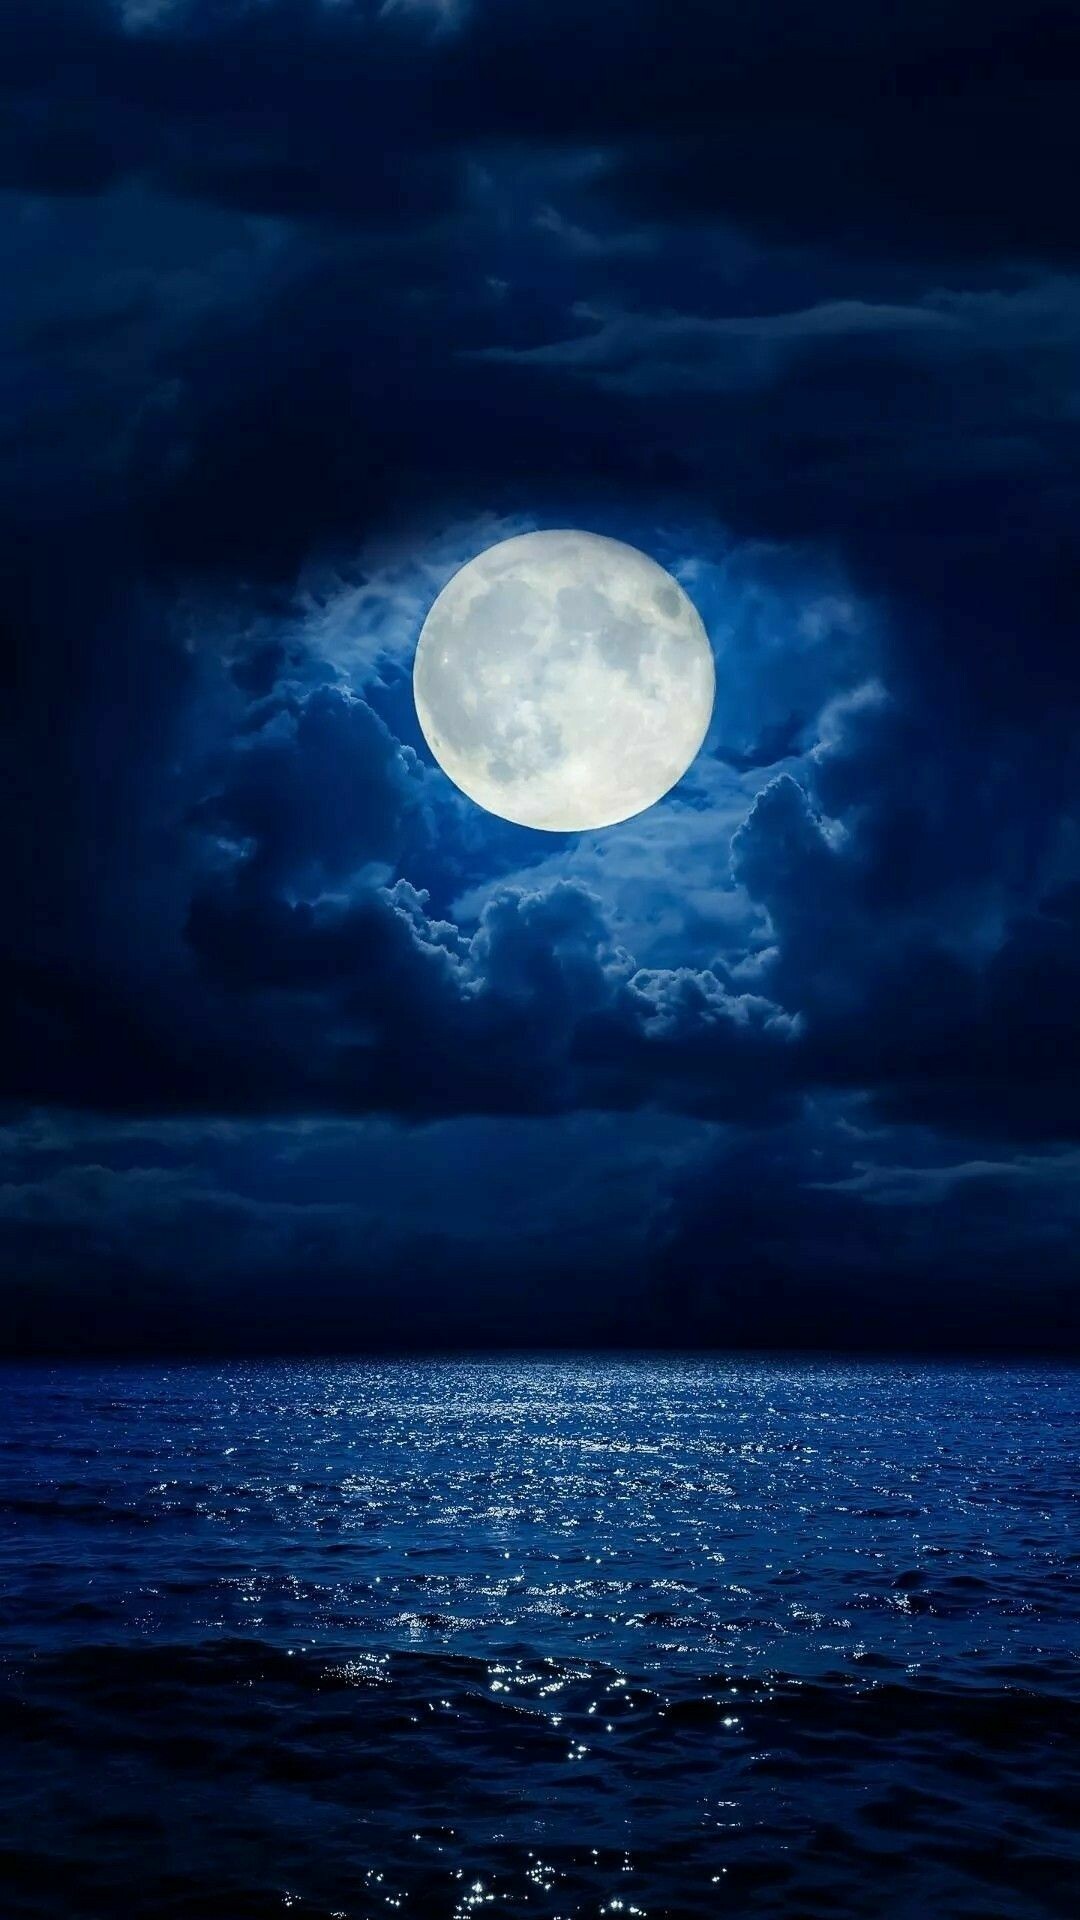 Moonlight: Celestial bodies, Night sky, Beautiful moon. 1080x1920 Full HD Wallpaper.